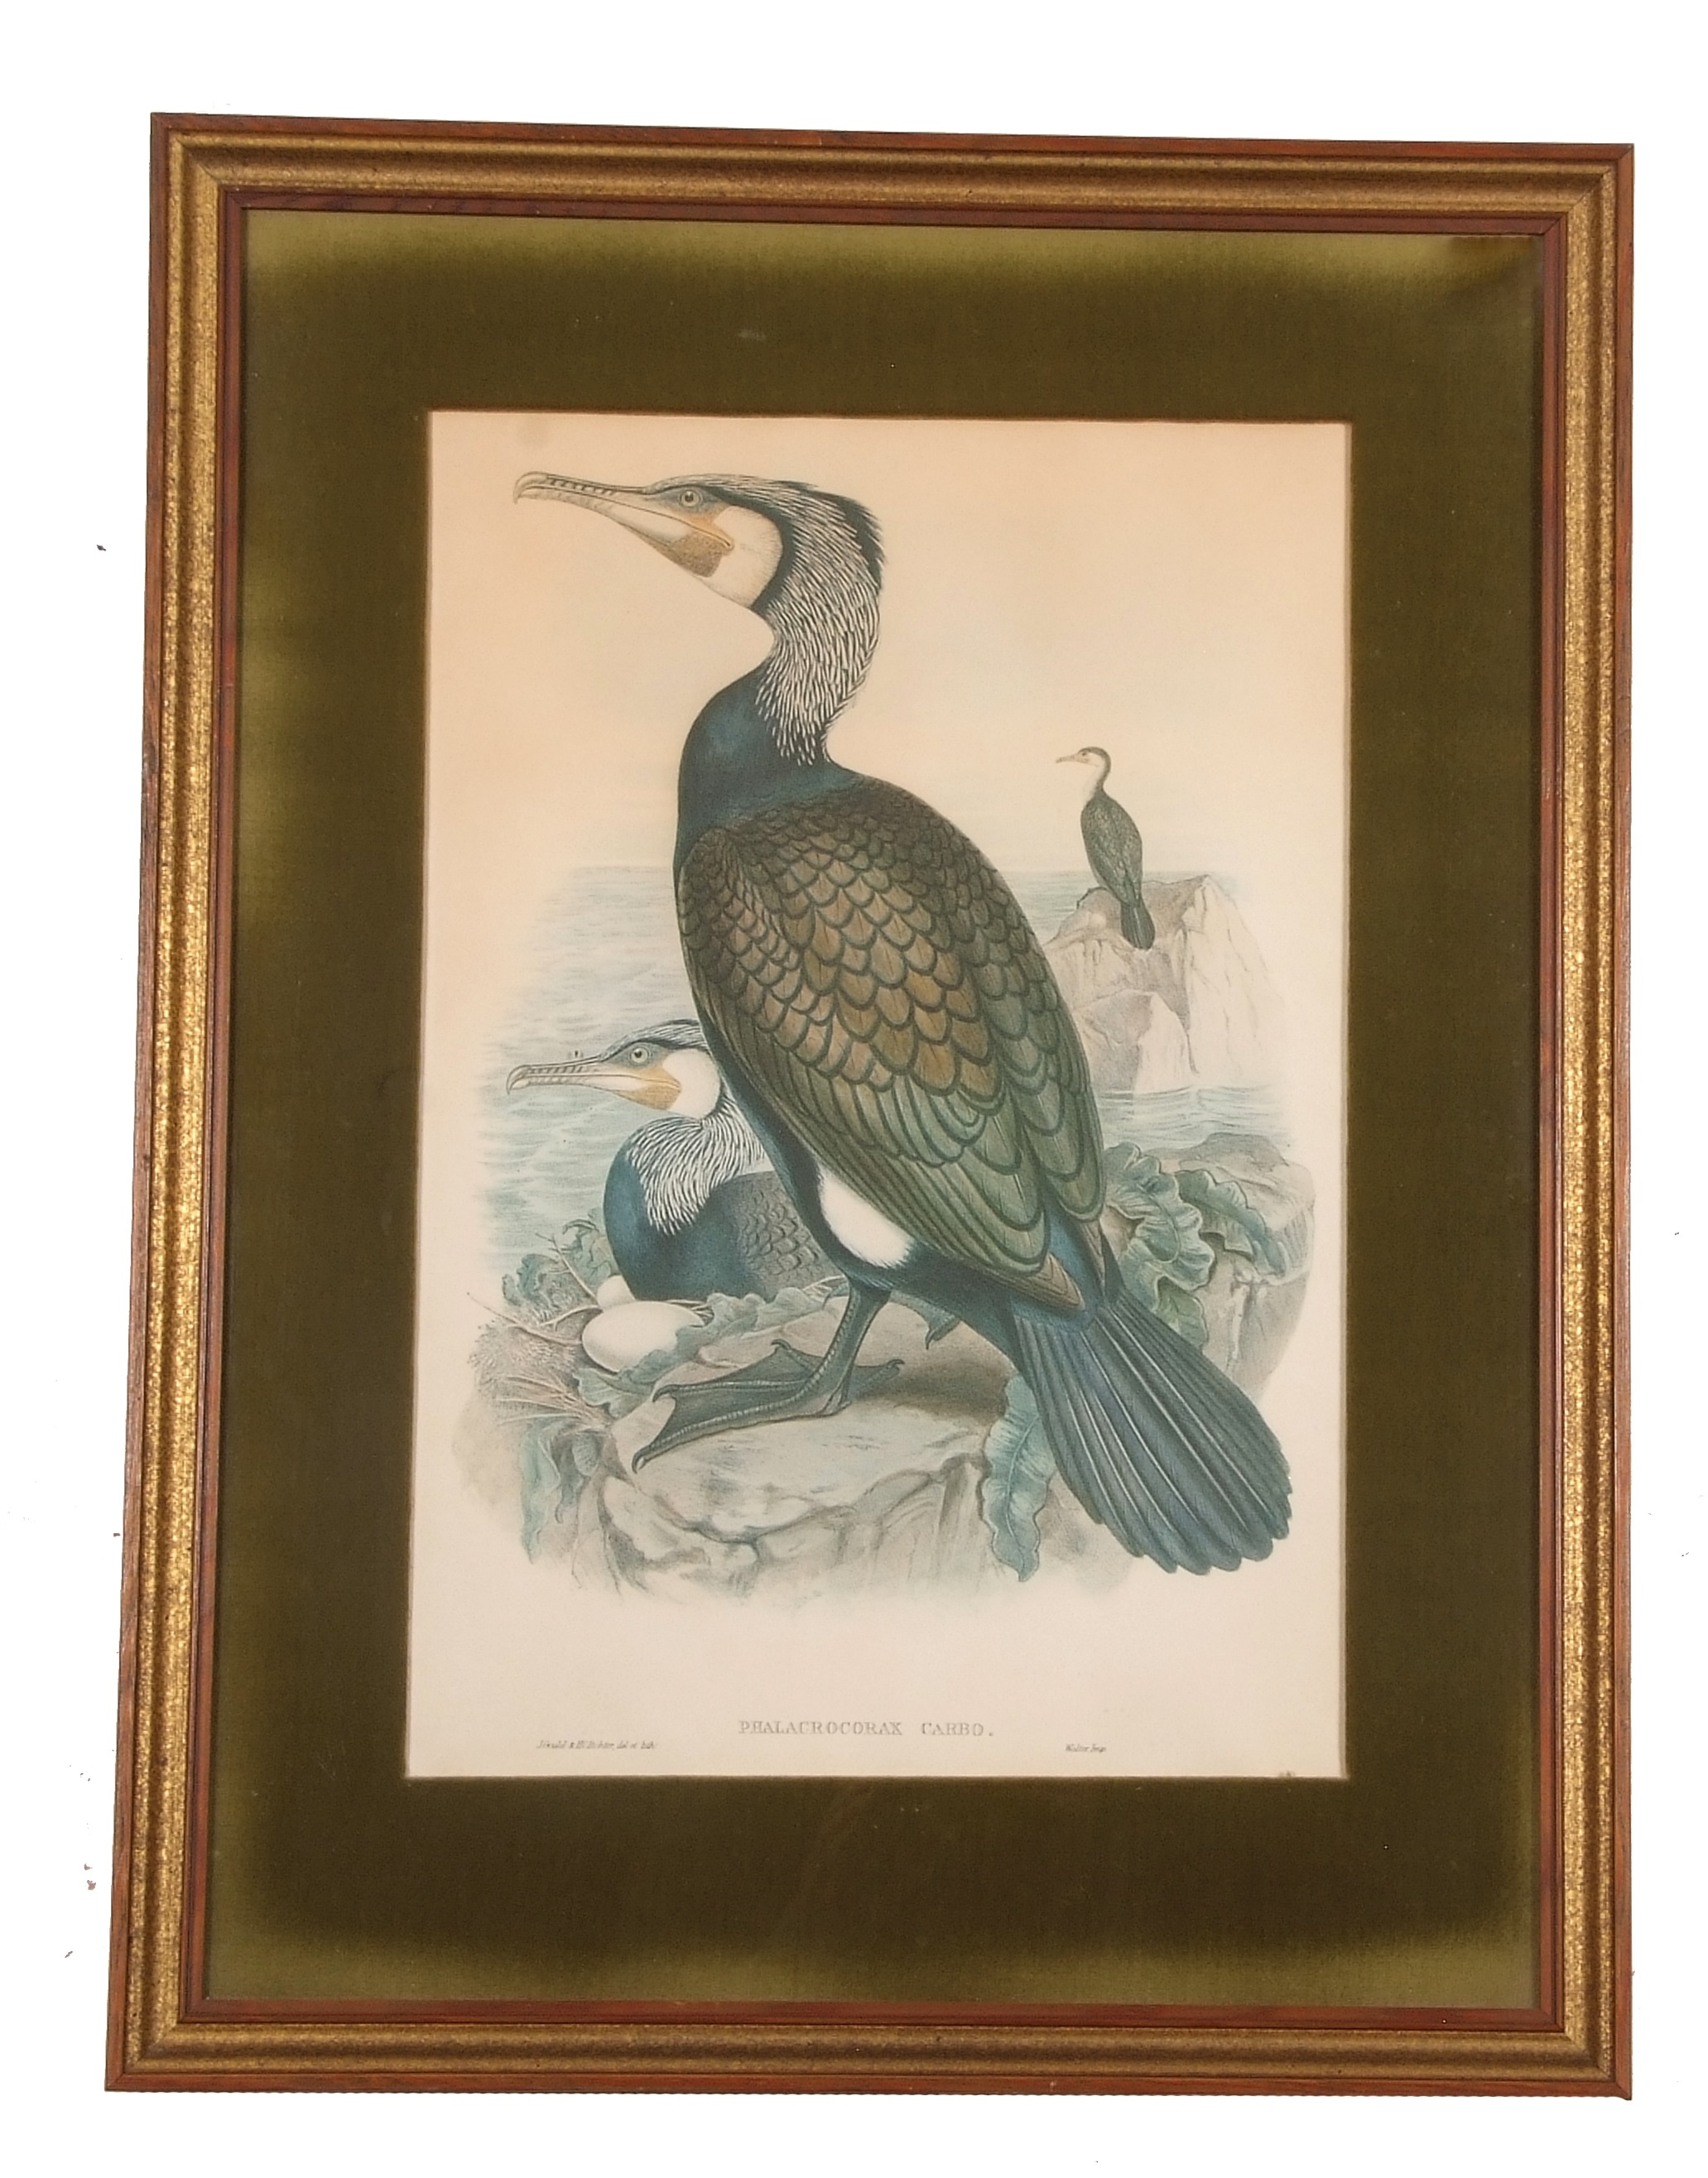 'Phalacrocorax Carbo' (Cormorant) - Henry Constantine Richter